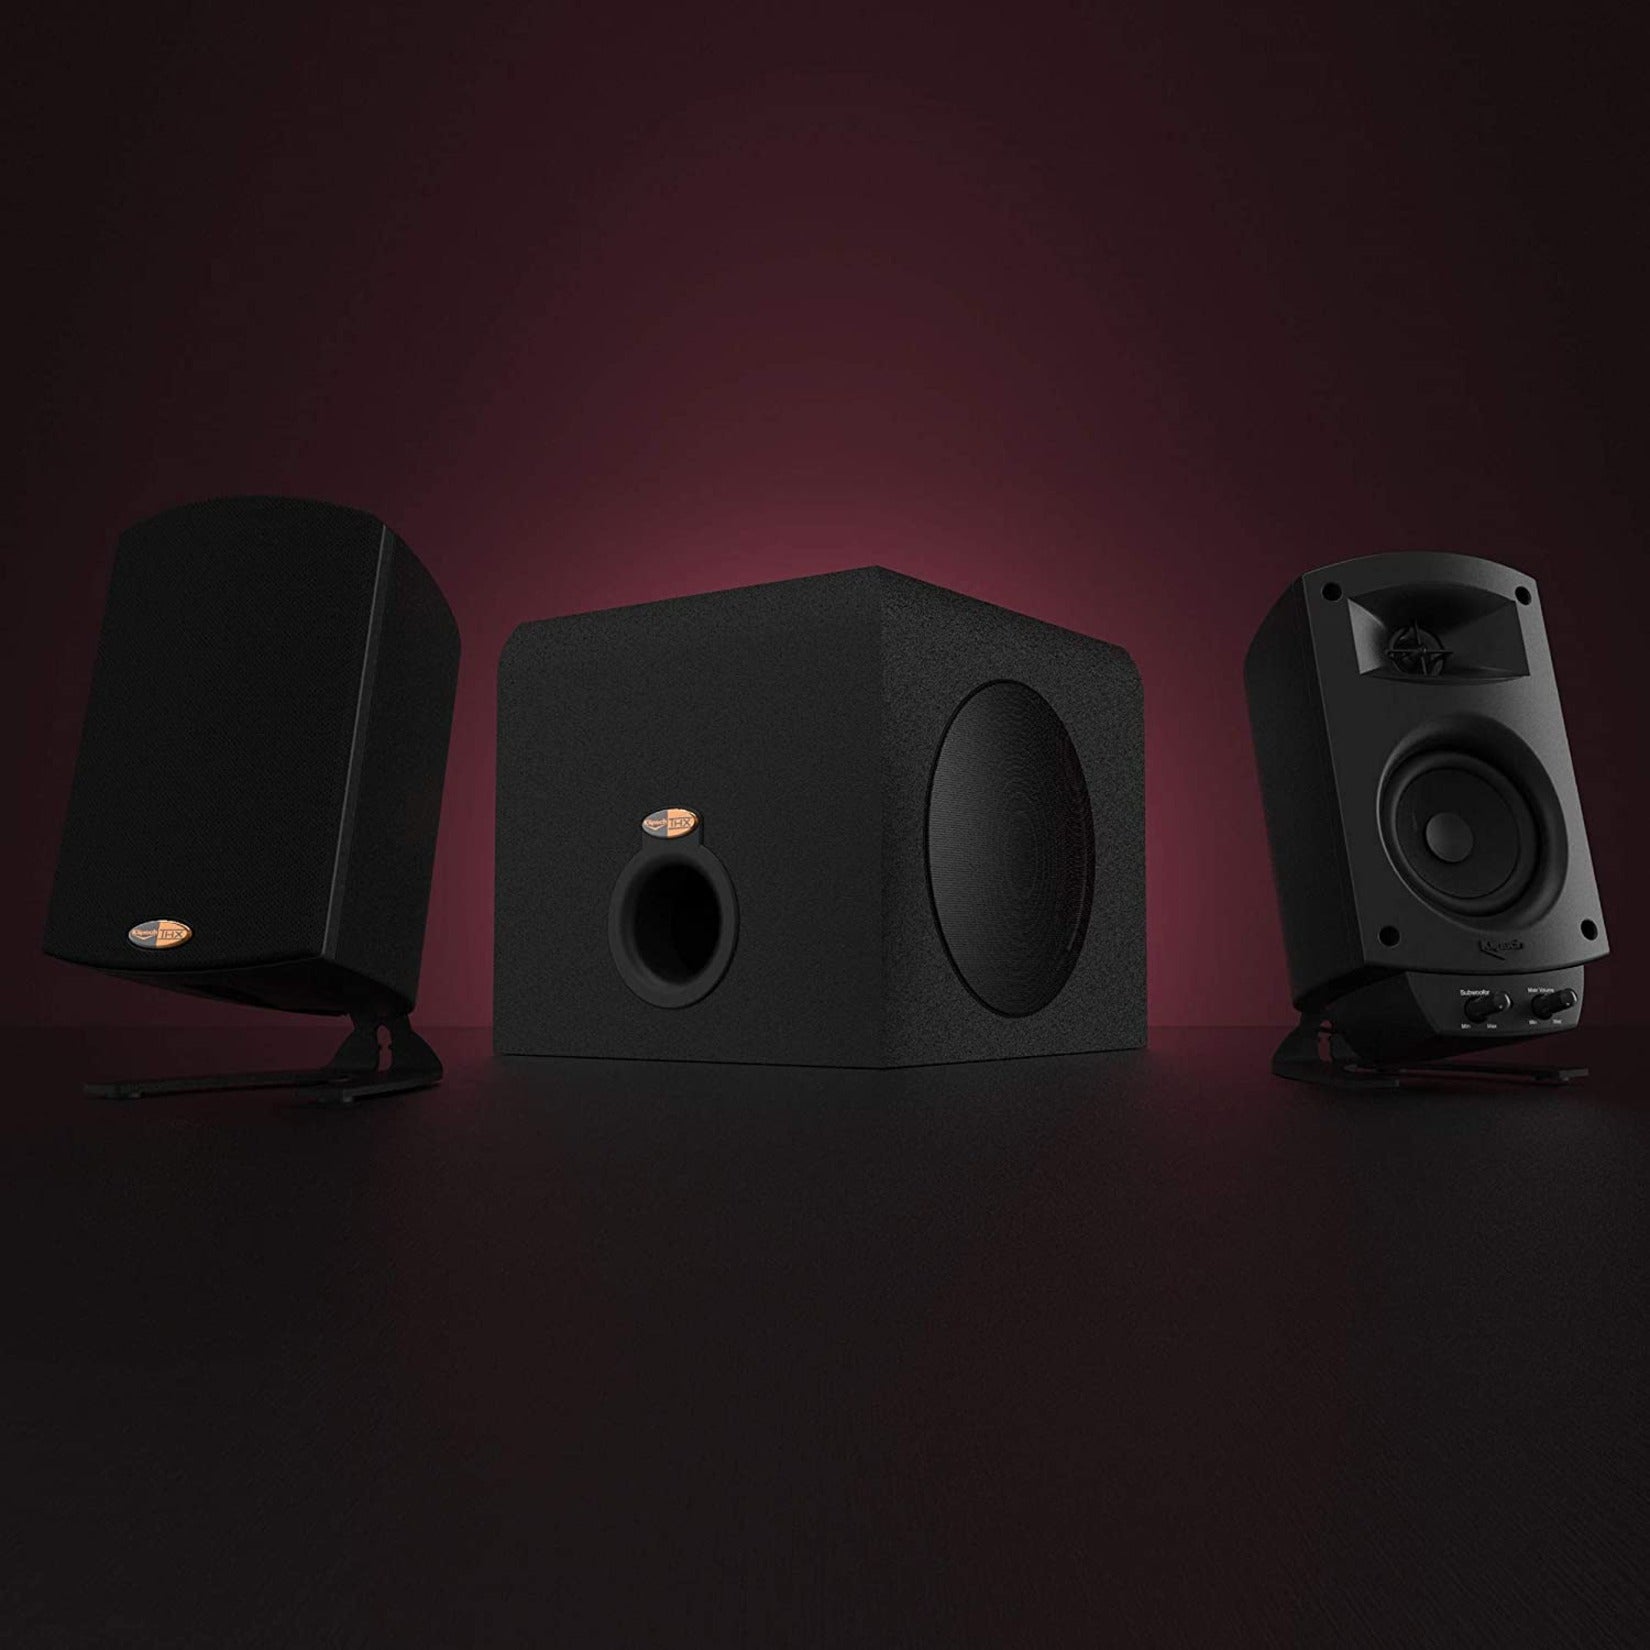 IMSourcing 1067415 Klipsh Promeida 2.1 THX Certified, Active Speaker System